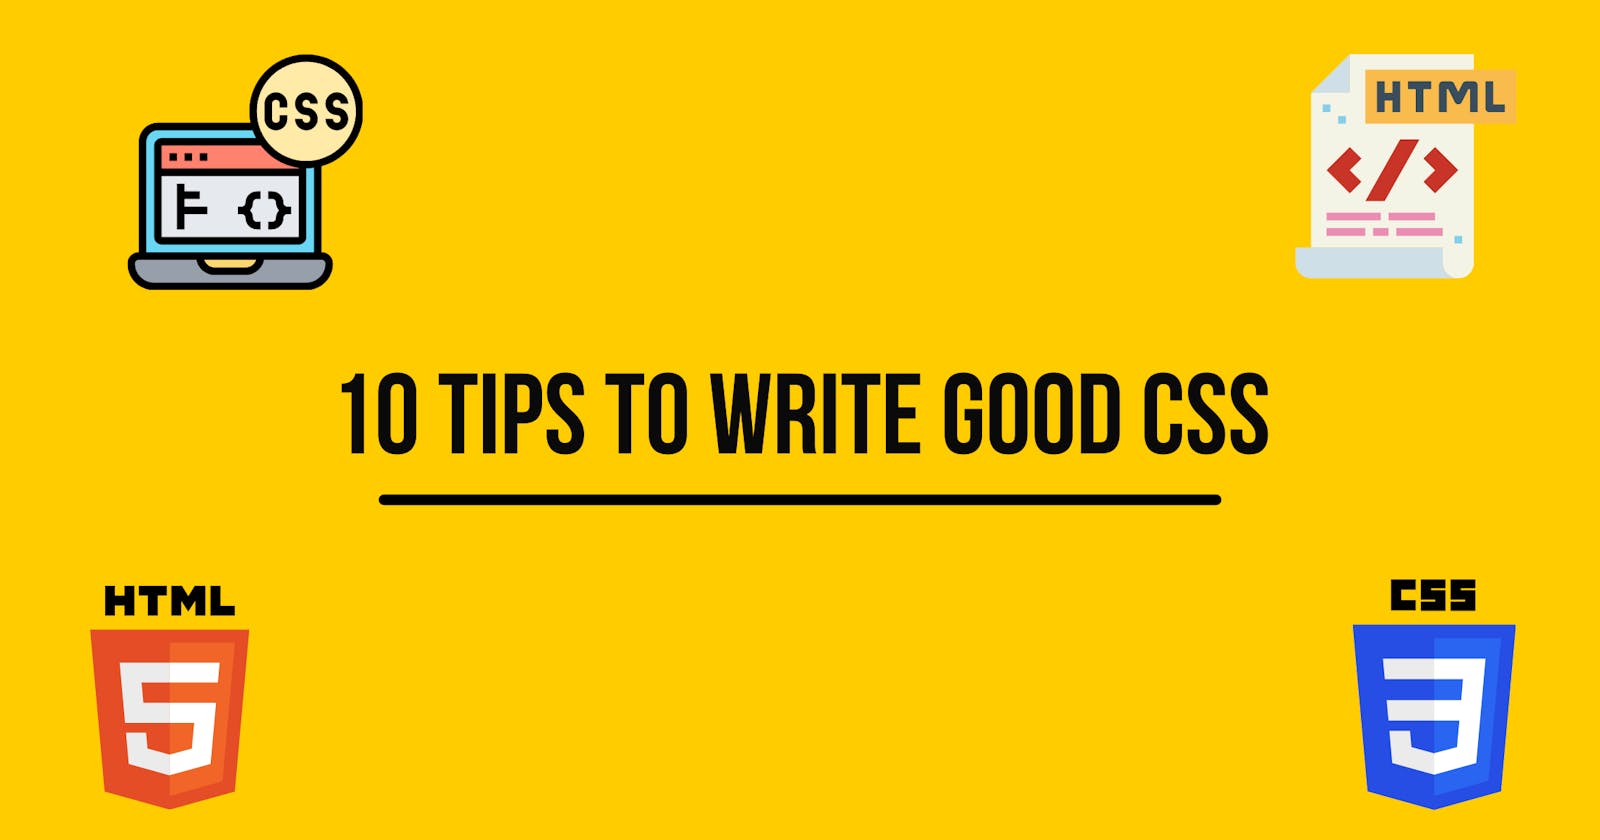 10 tips to write good CSS